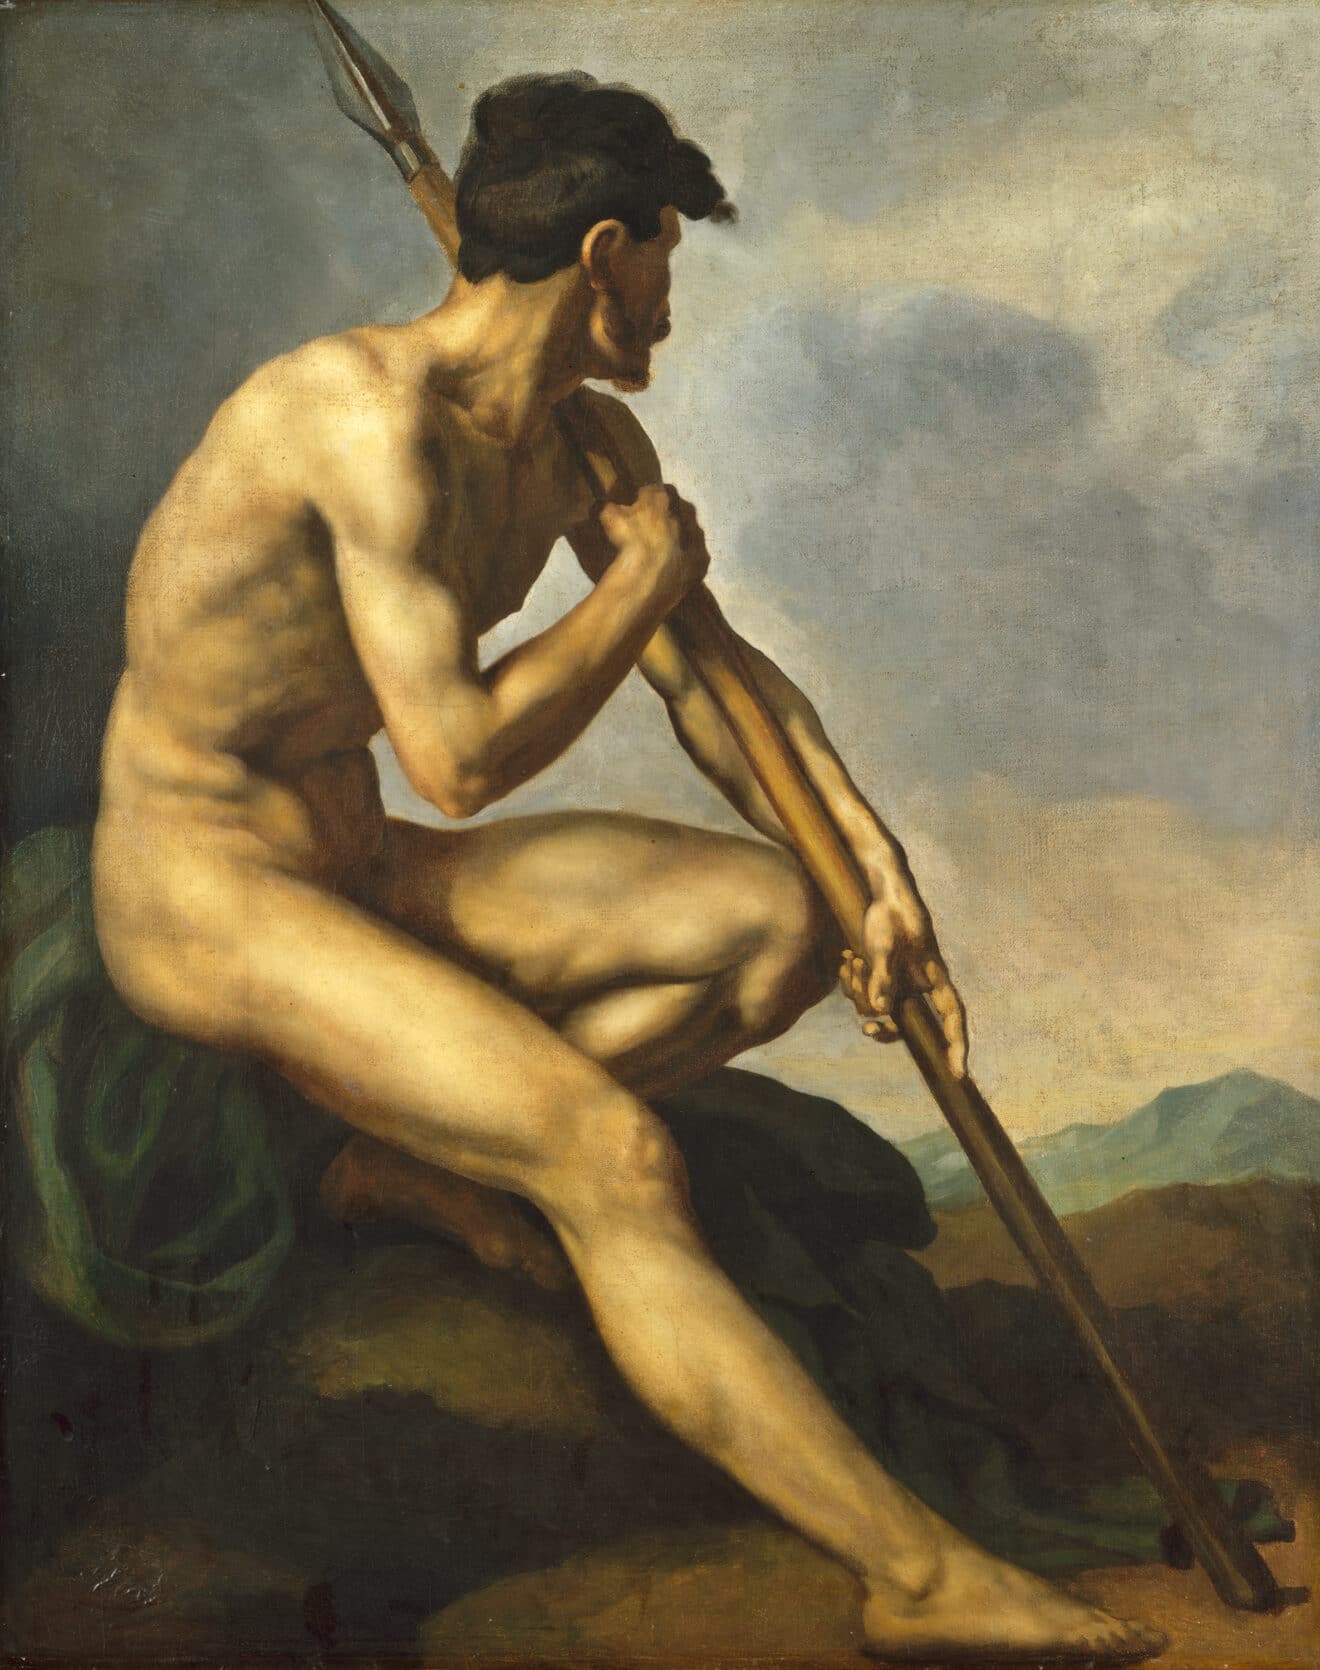 Théodore Géricault, Nude Warrior with a Spear, ca. 1816, National Gallery of Art, Washington, DC, USA. 